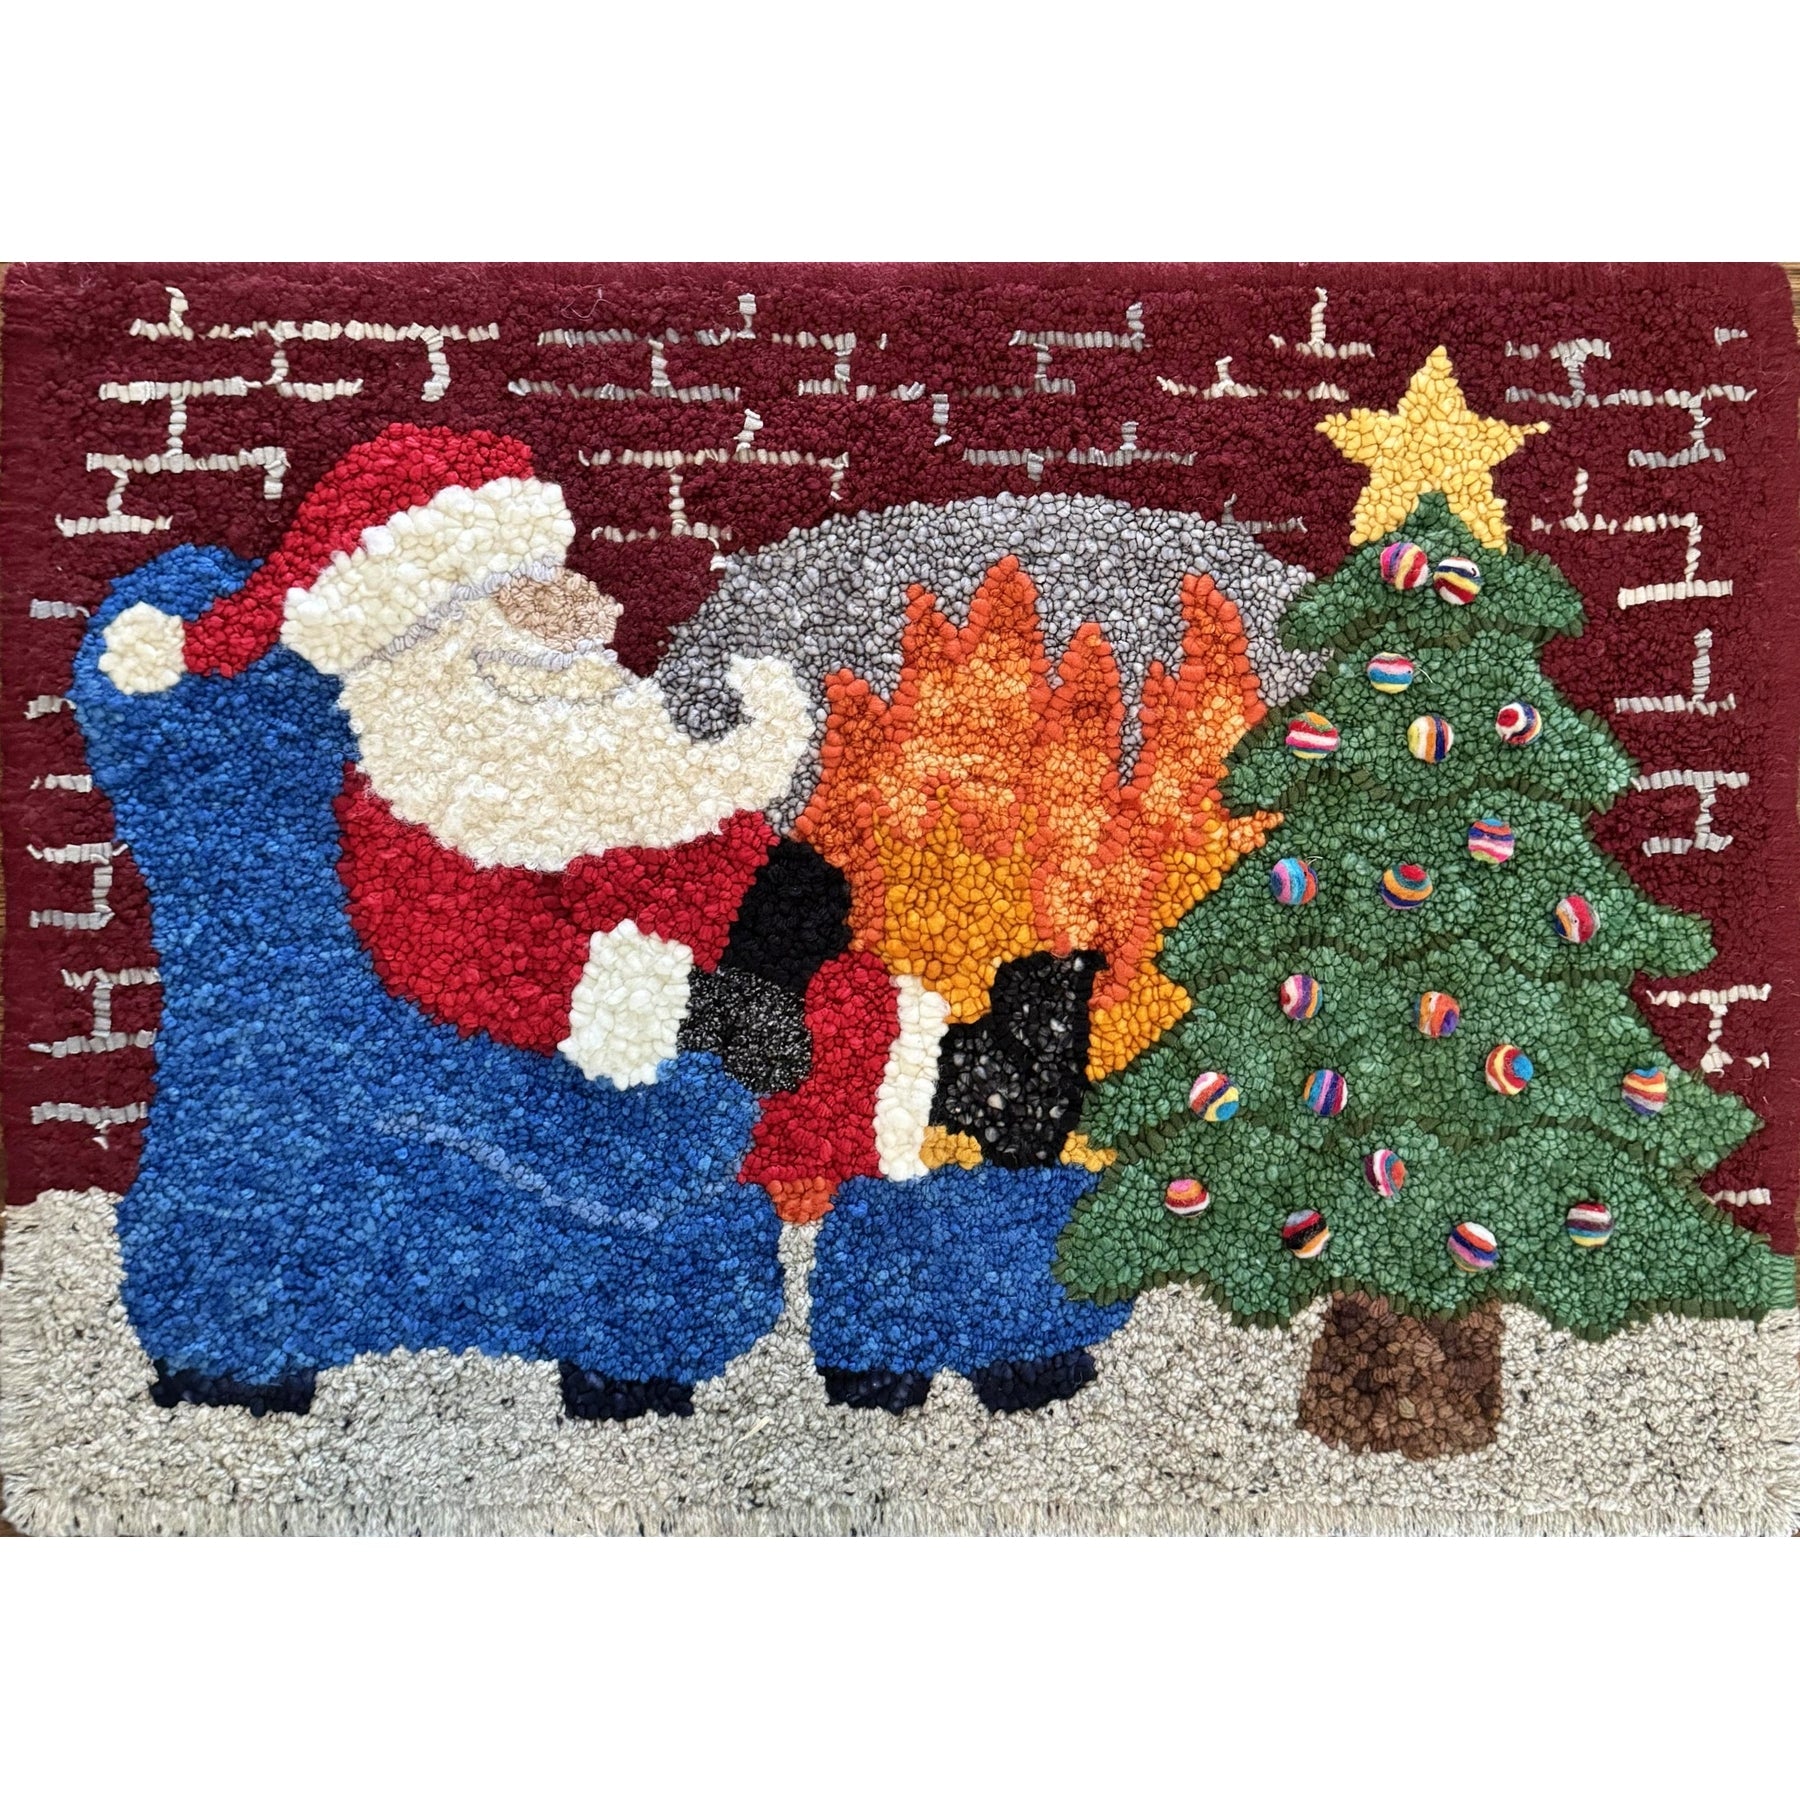 Santa by the Fire, rug hooked by Deena Schaffer